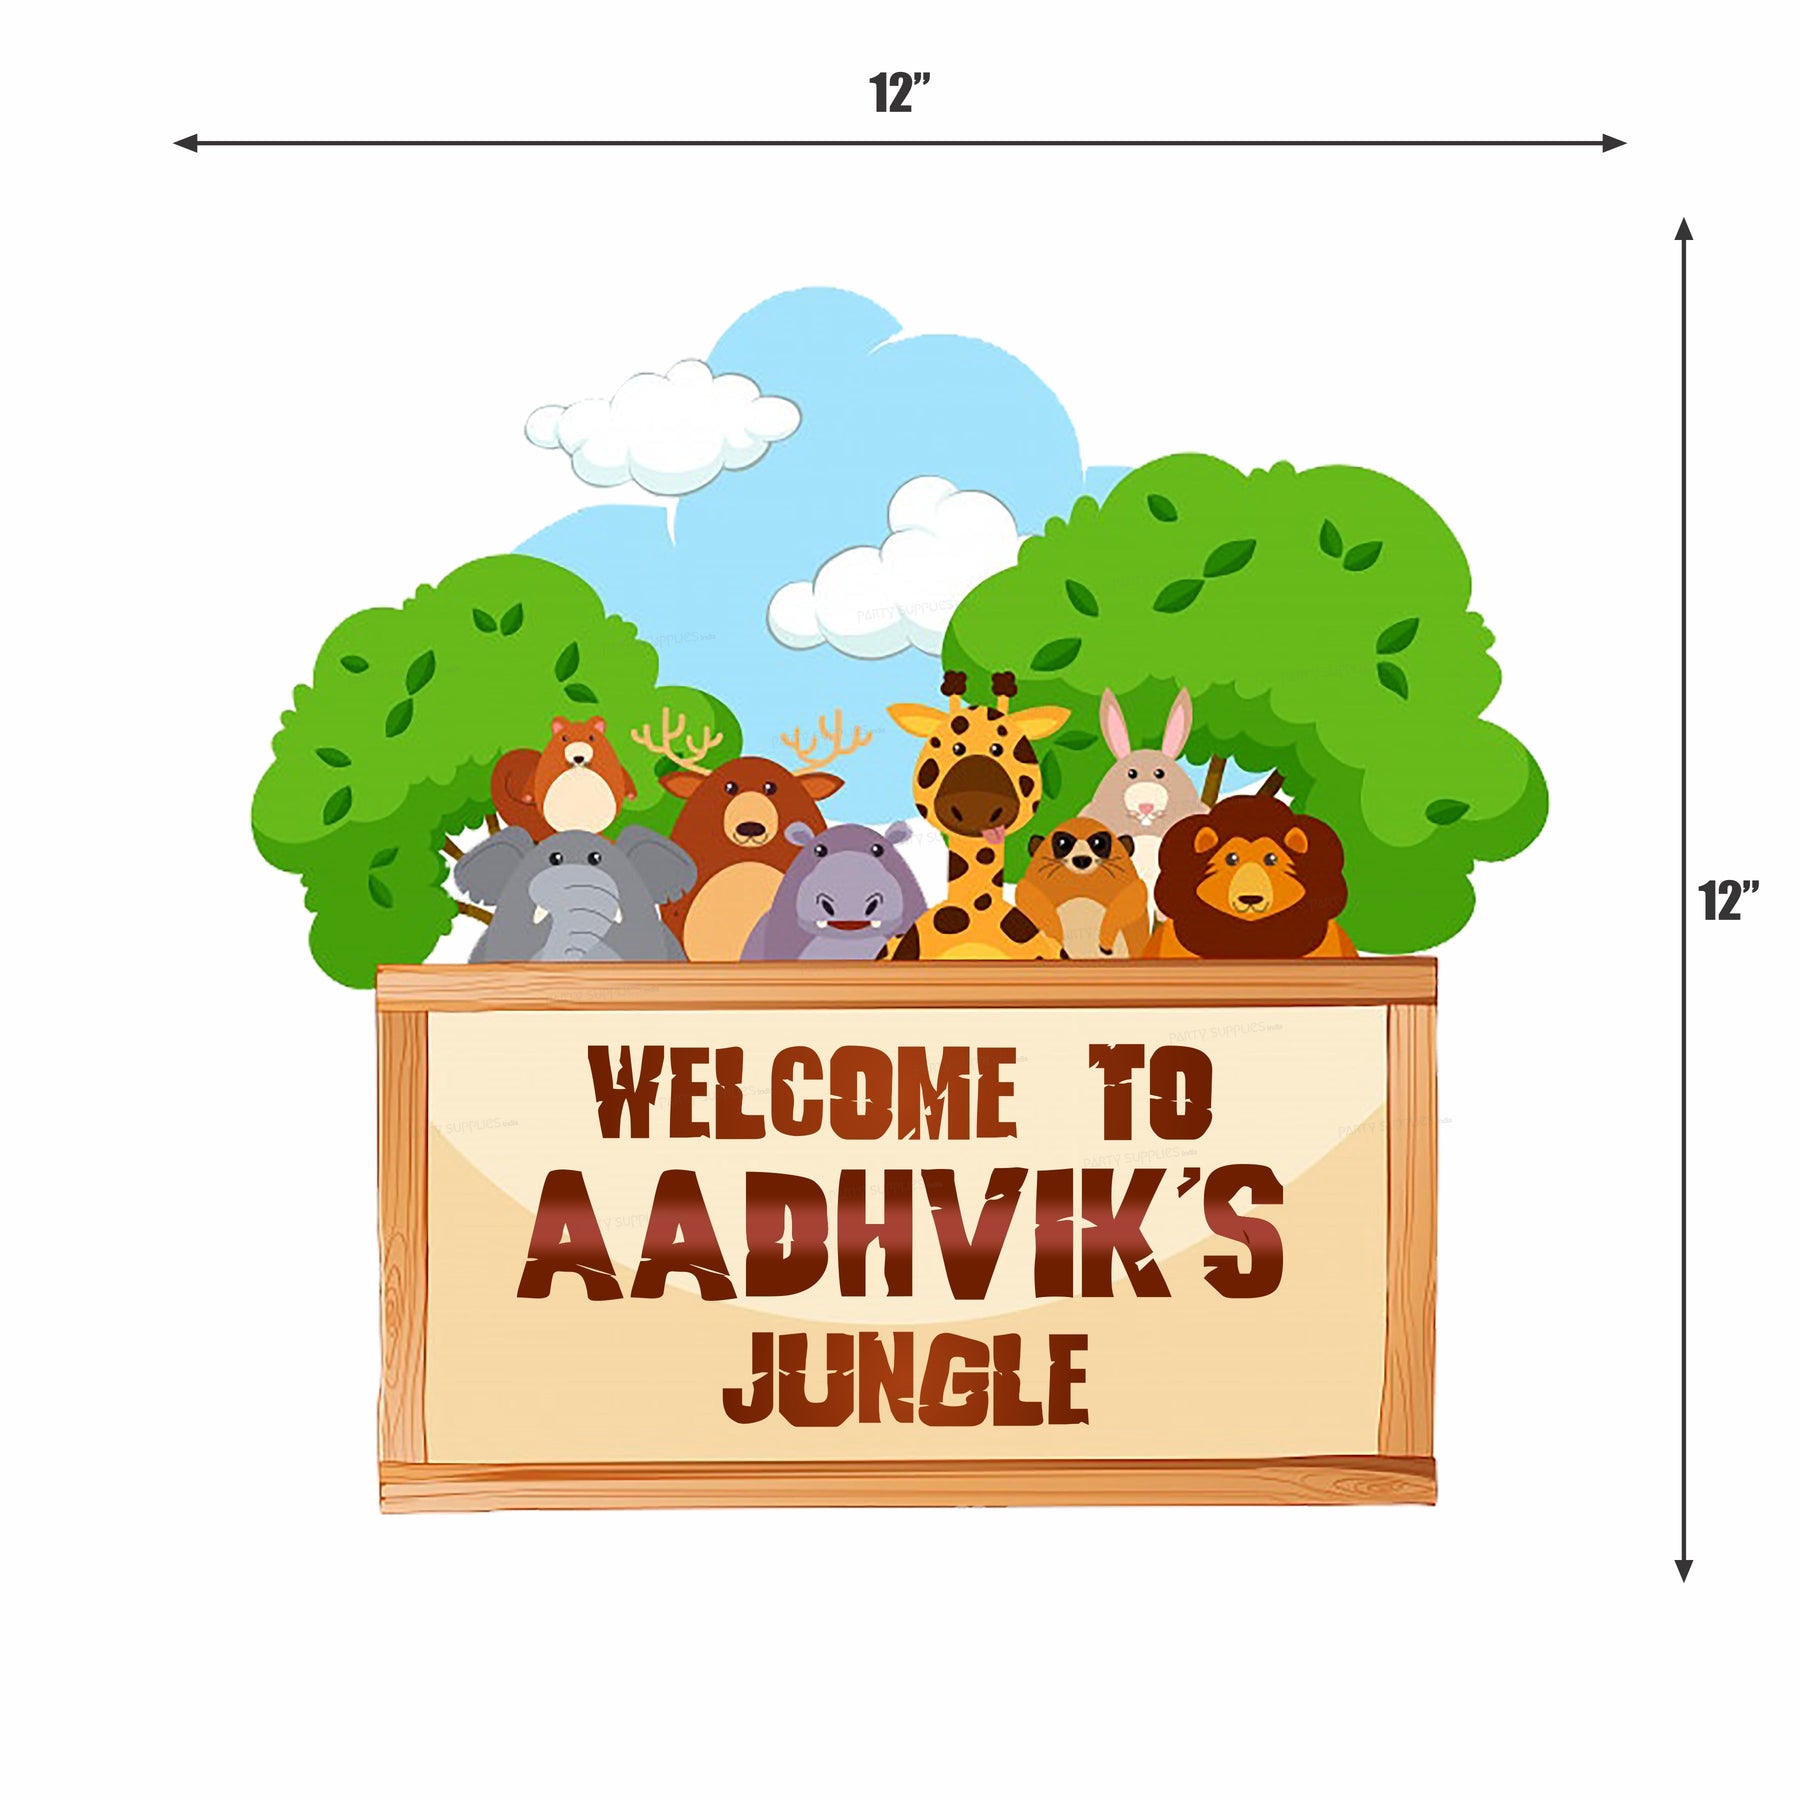 Jungle Theme Customized Welcome Board